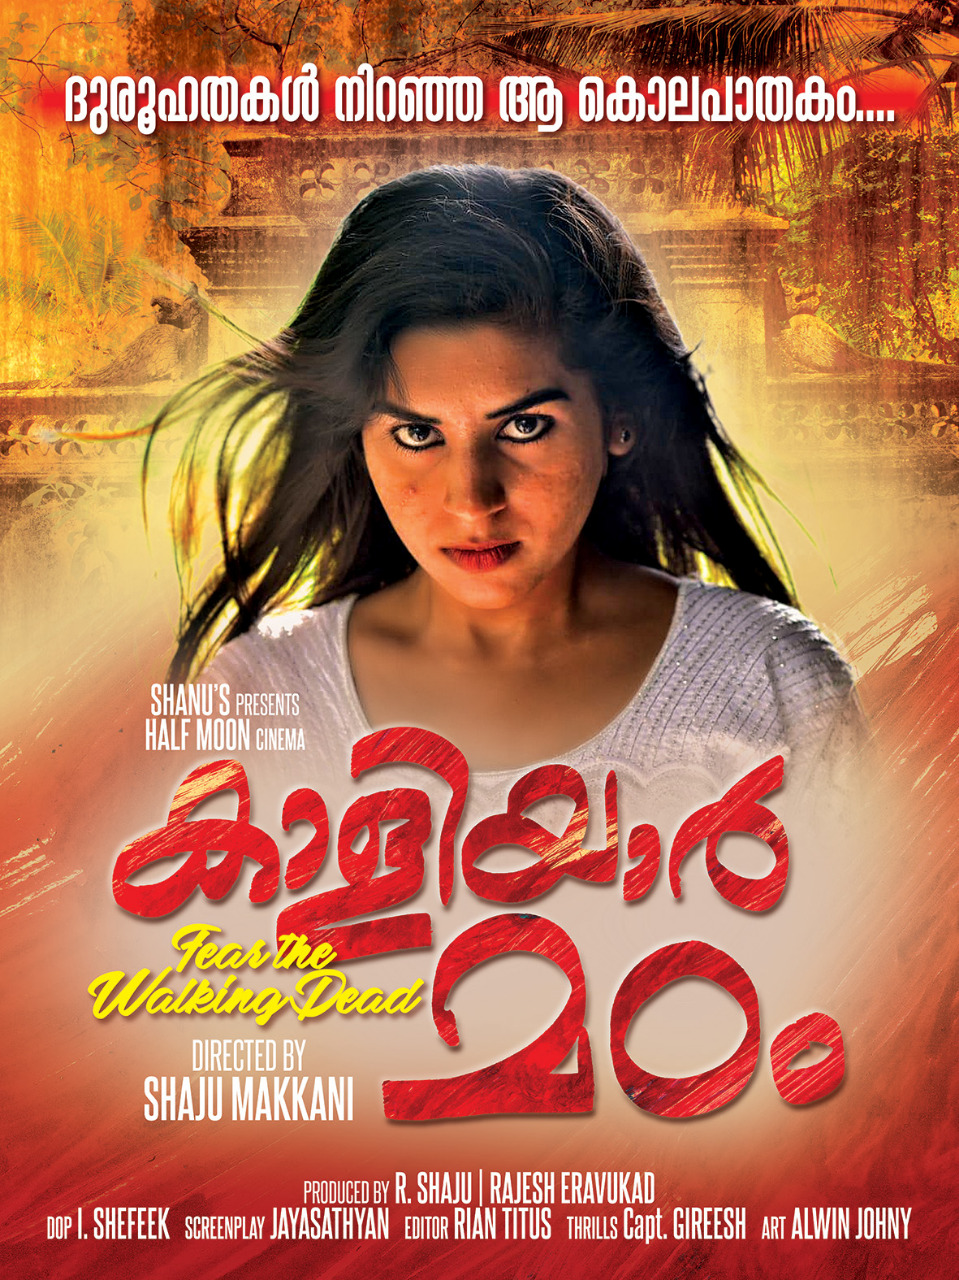 Kaliyar Mattom Malayalam Thriller Film Releasing soon FilmGappa